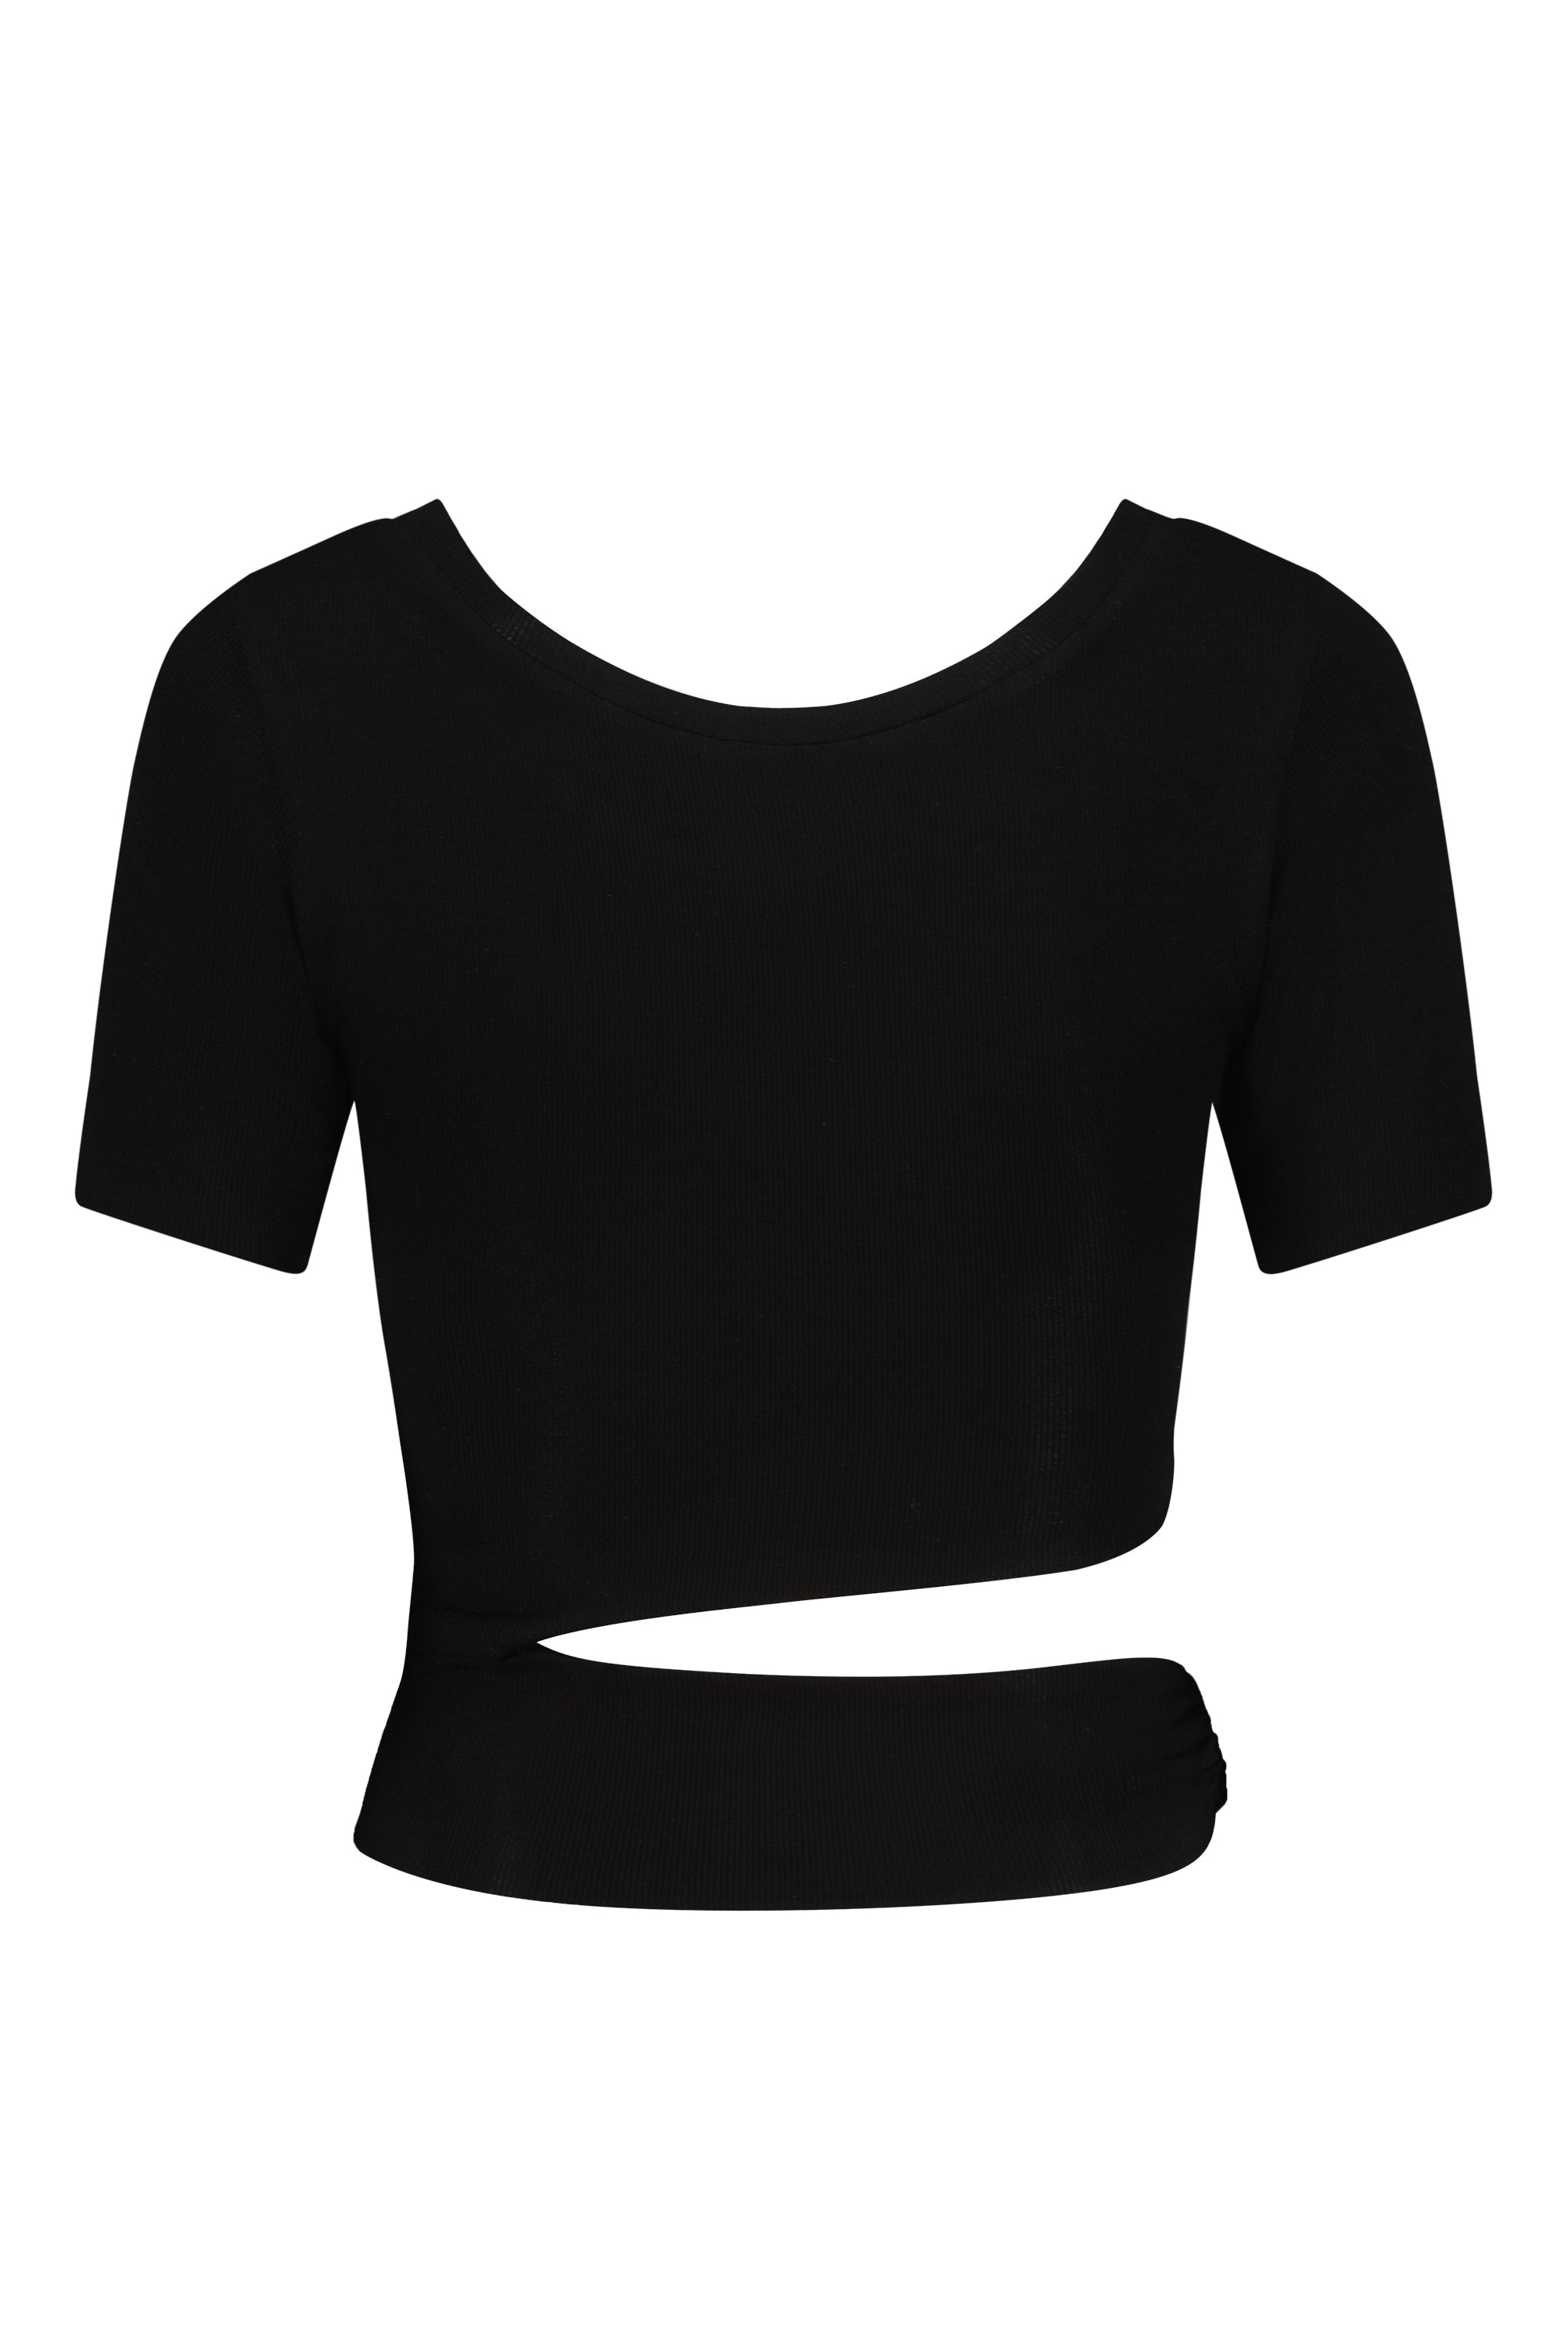 Athena T-Shirt Black